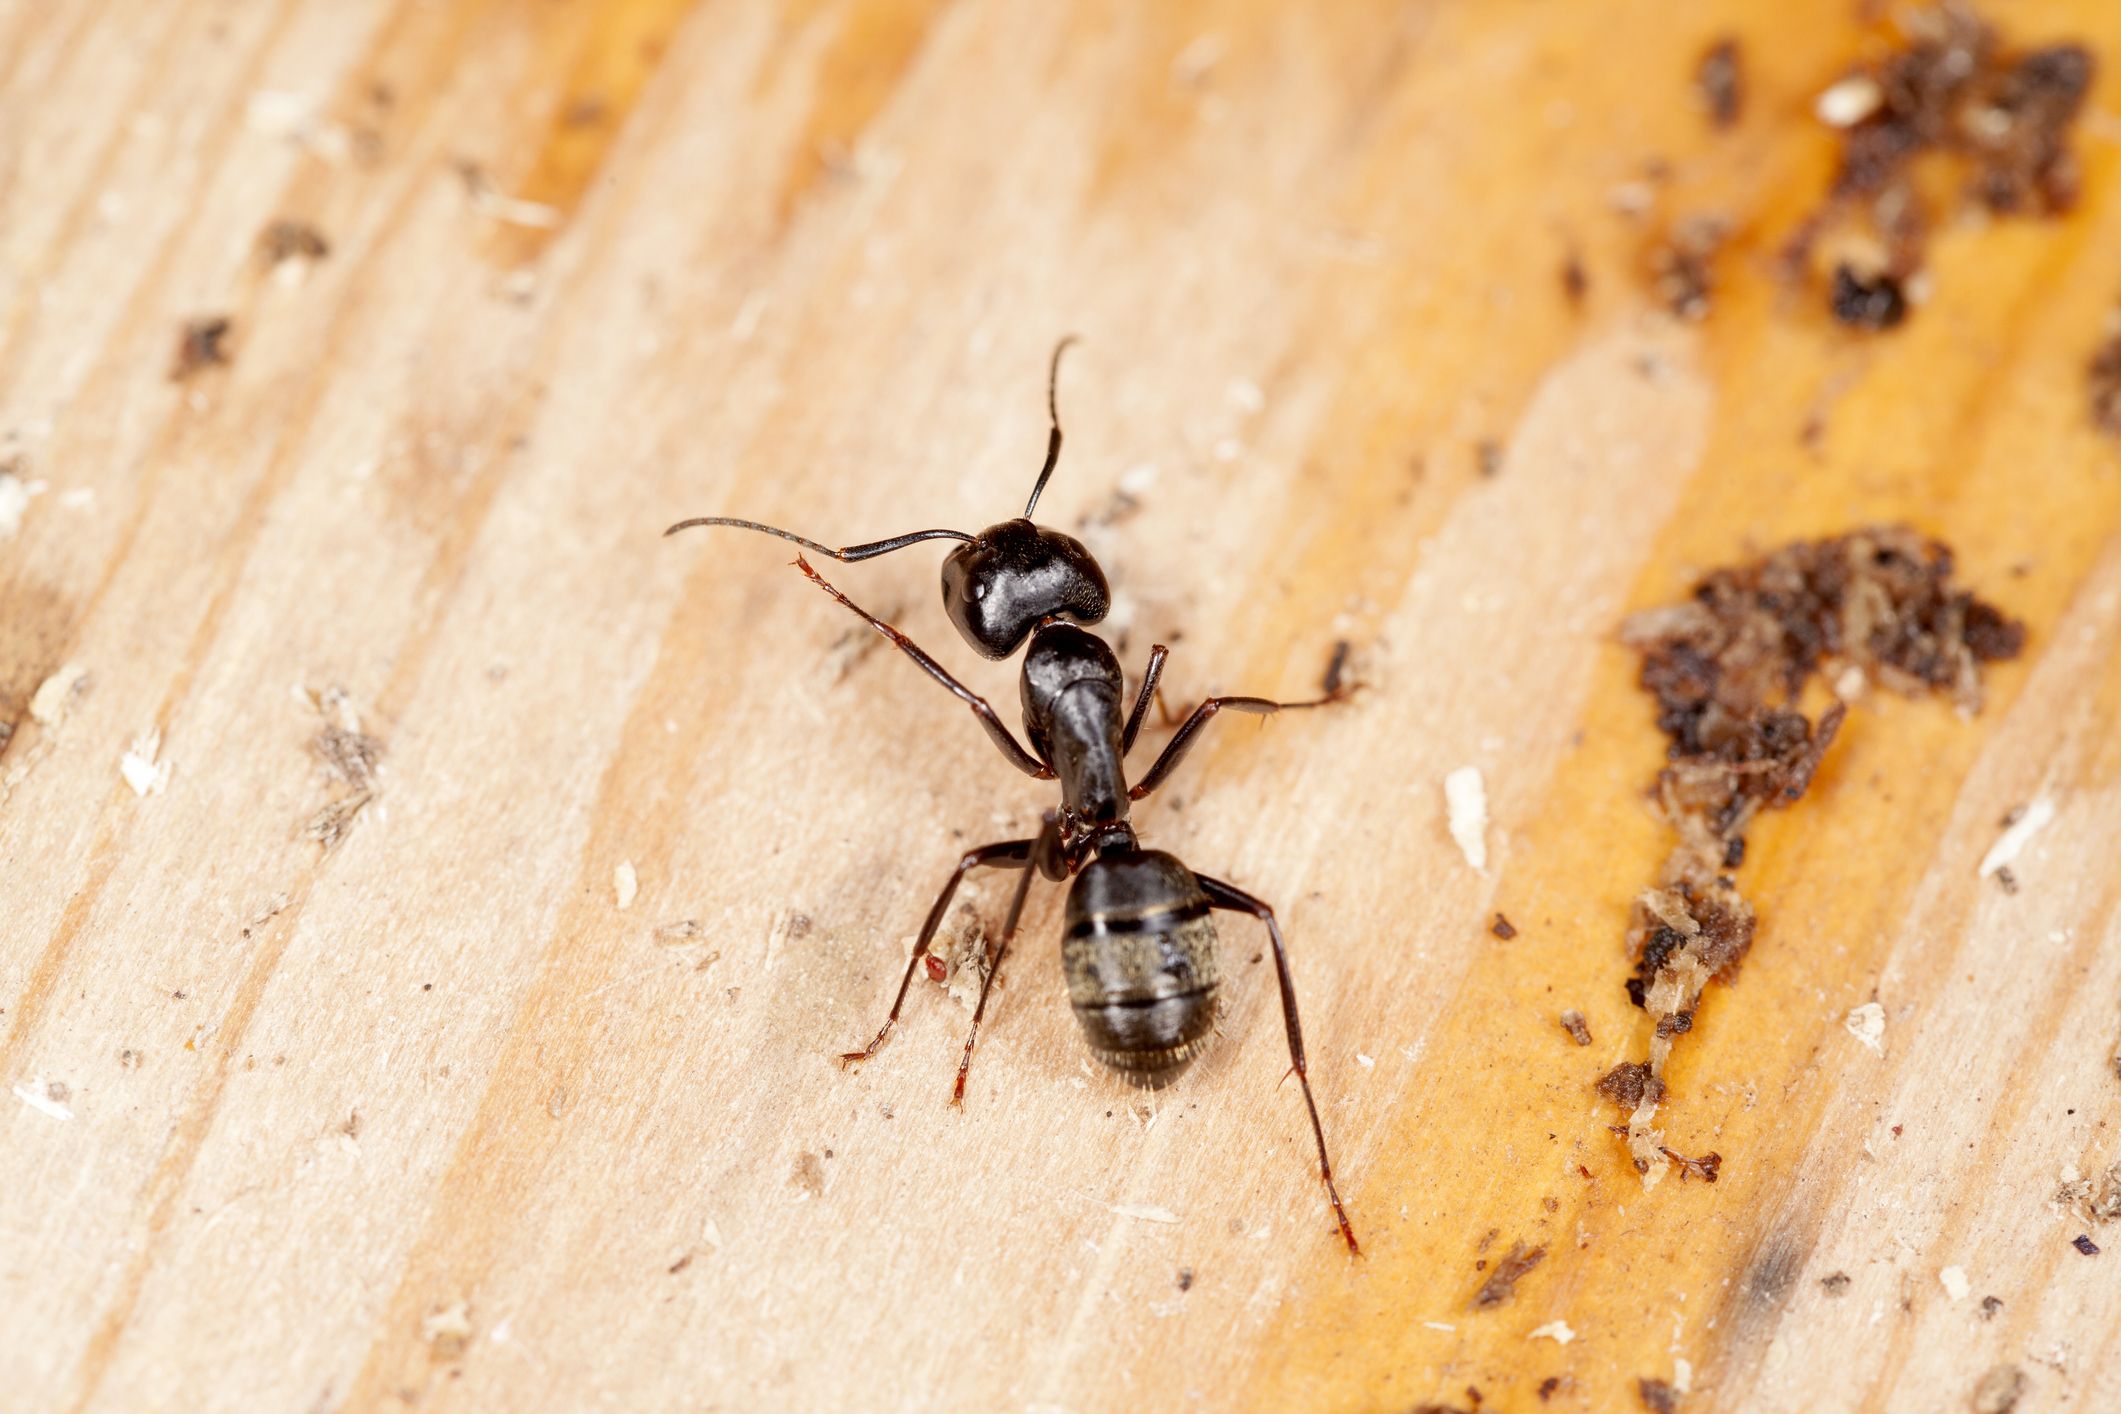 Carpenter Ant Crawling On Wood Royalty Free Image 1599148360 